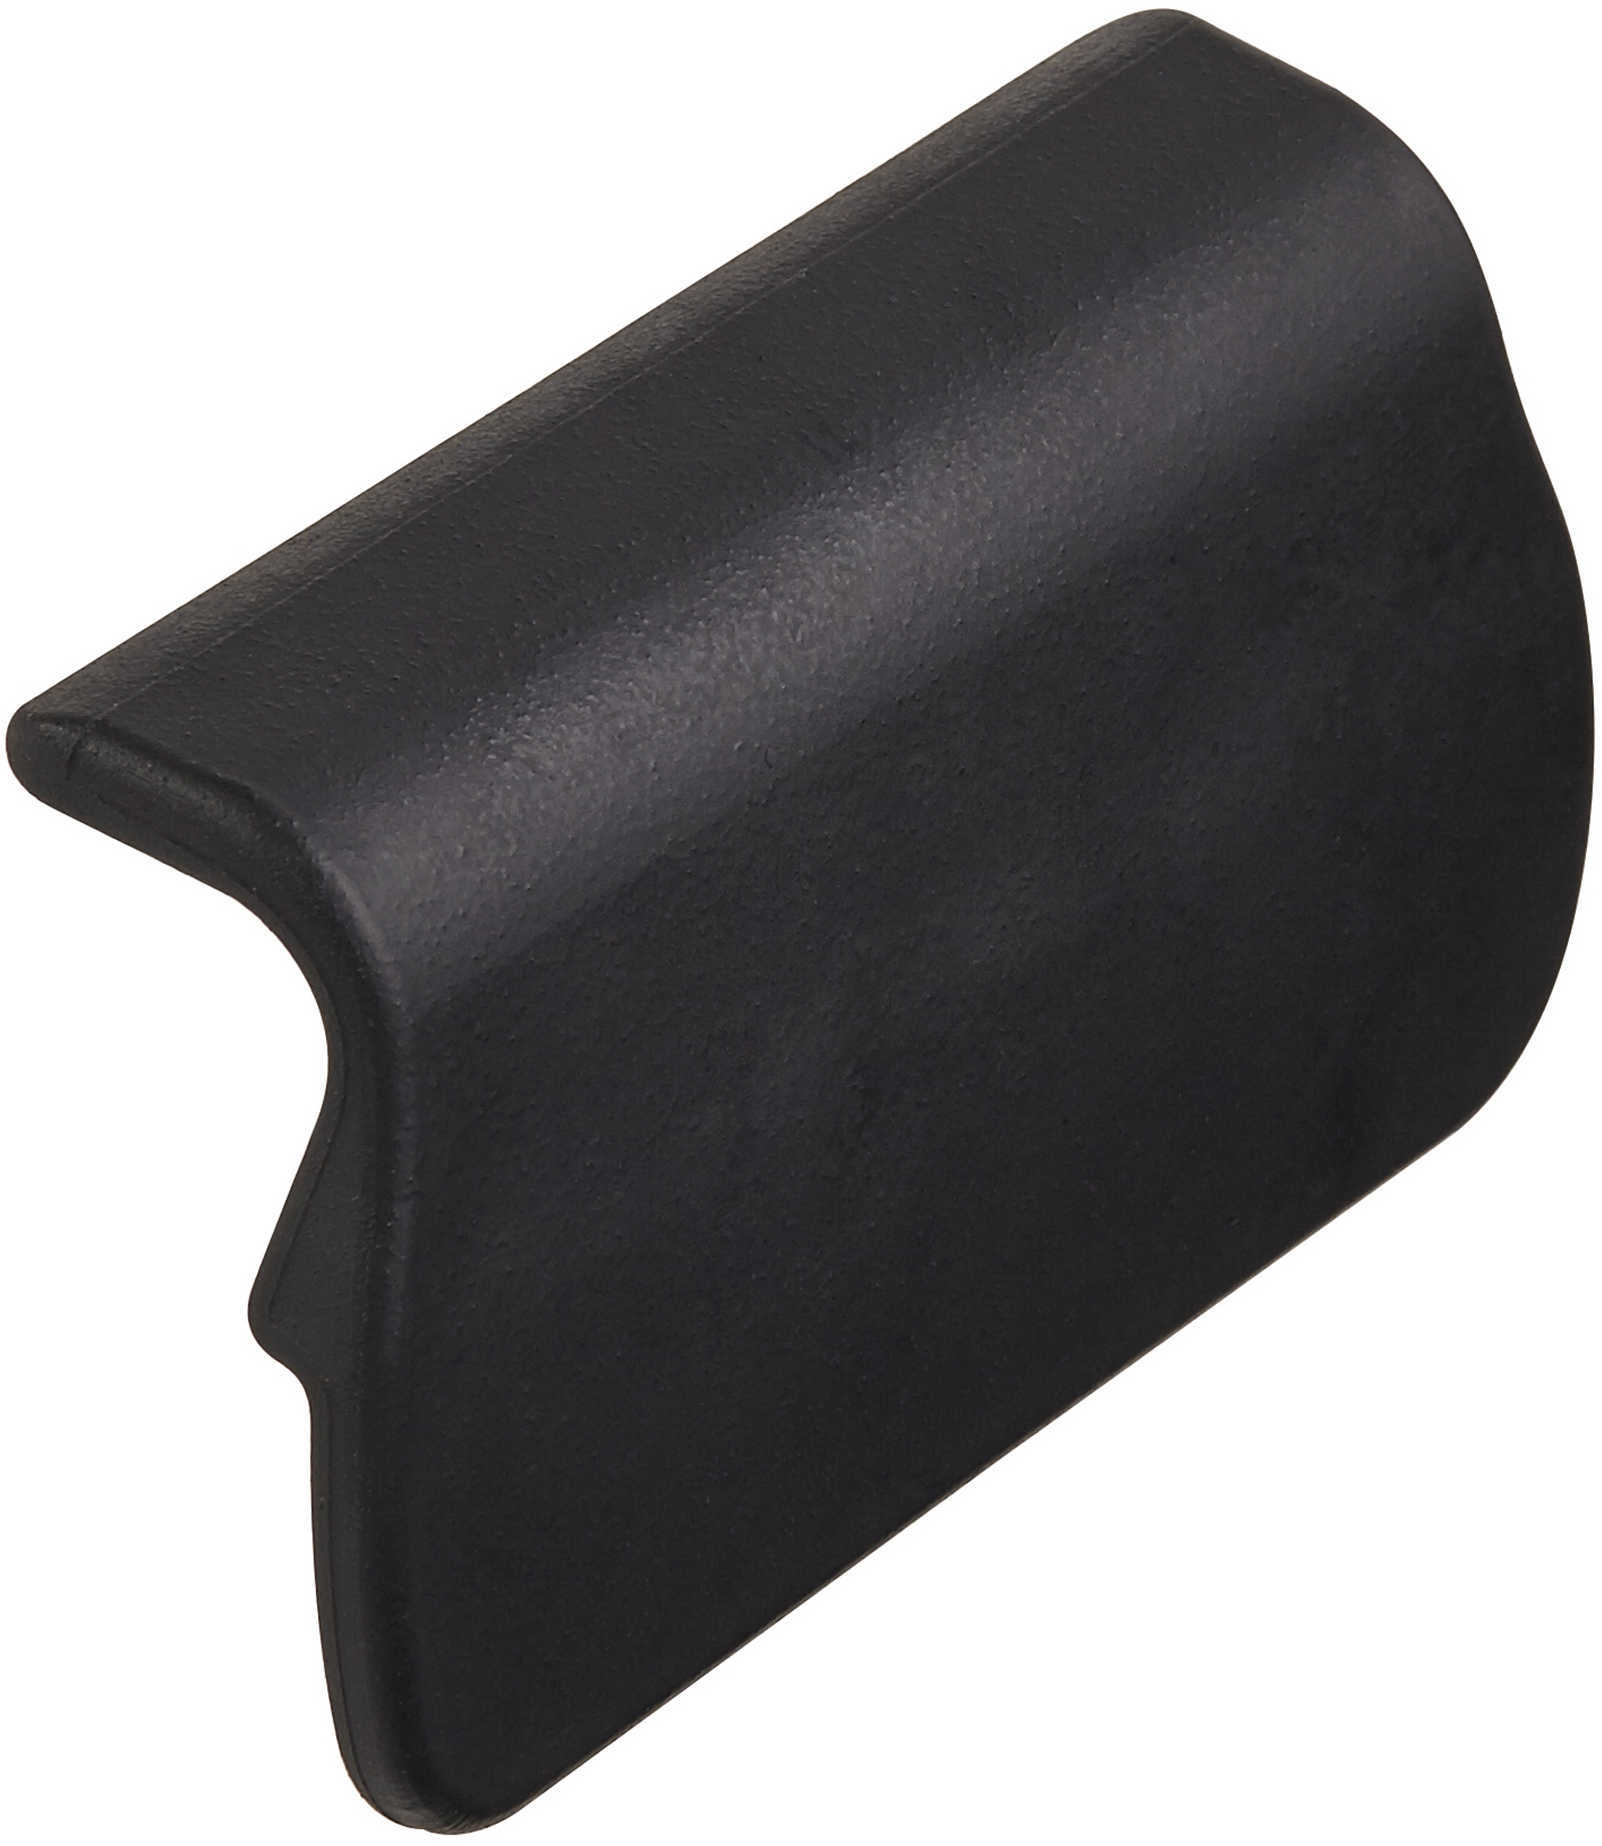 Excalibur Cheekpiece Black for Micro/Matrix Grizzly Model: 7001